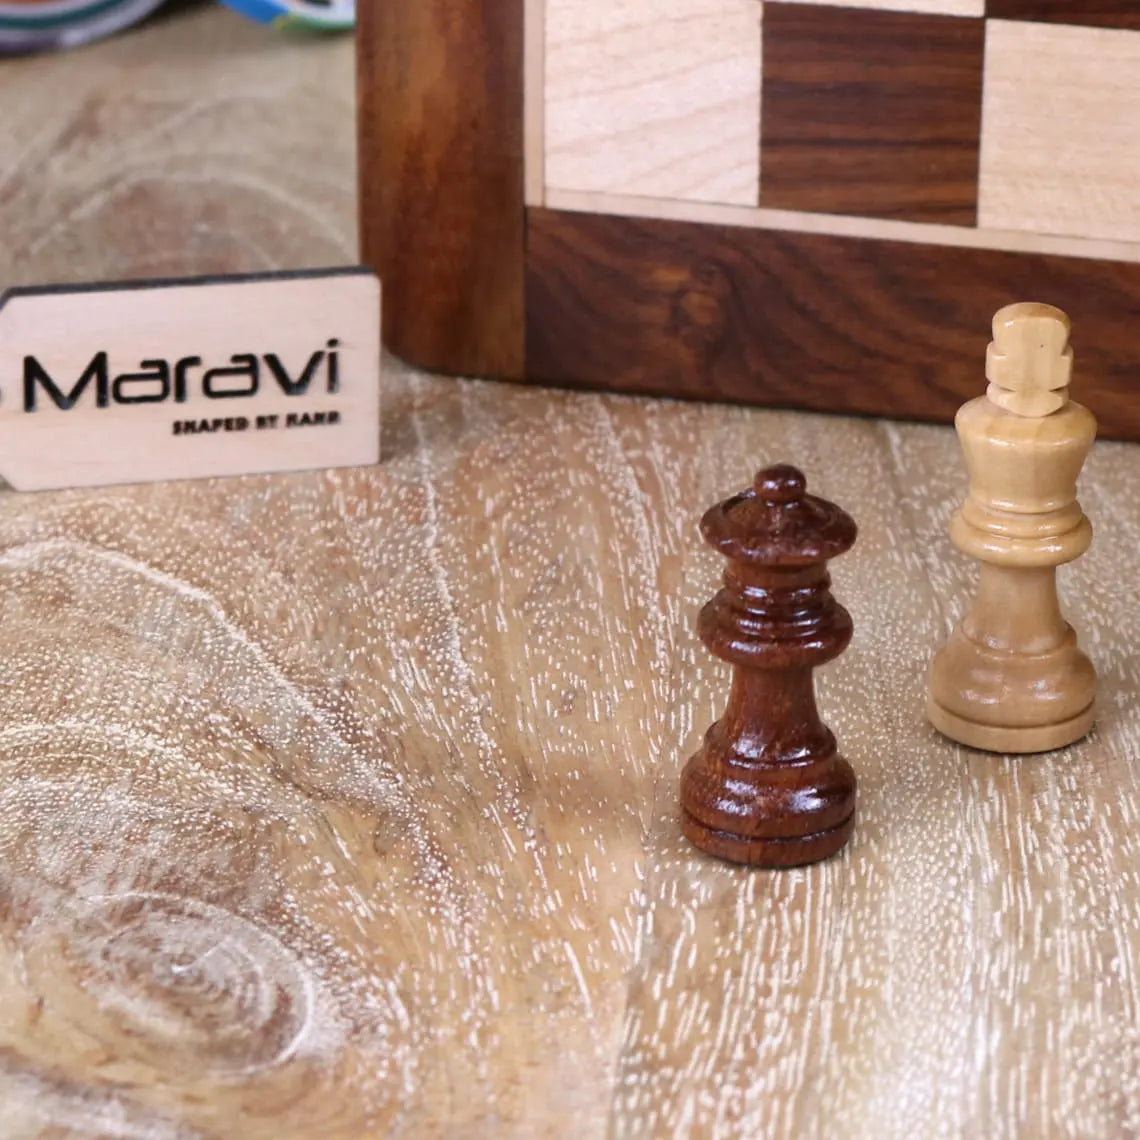 Shatranj Wooden Chess Set 26cm - Closeup of King and Queen